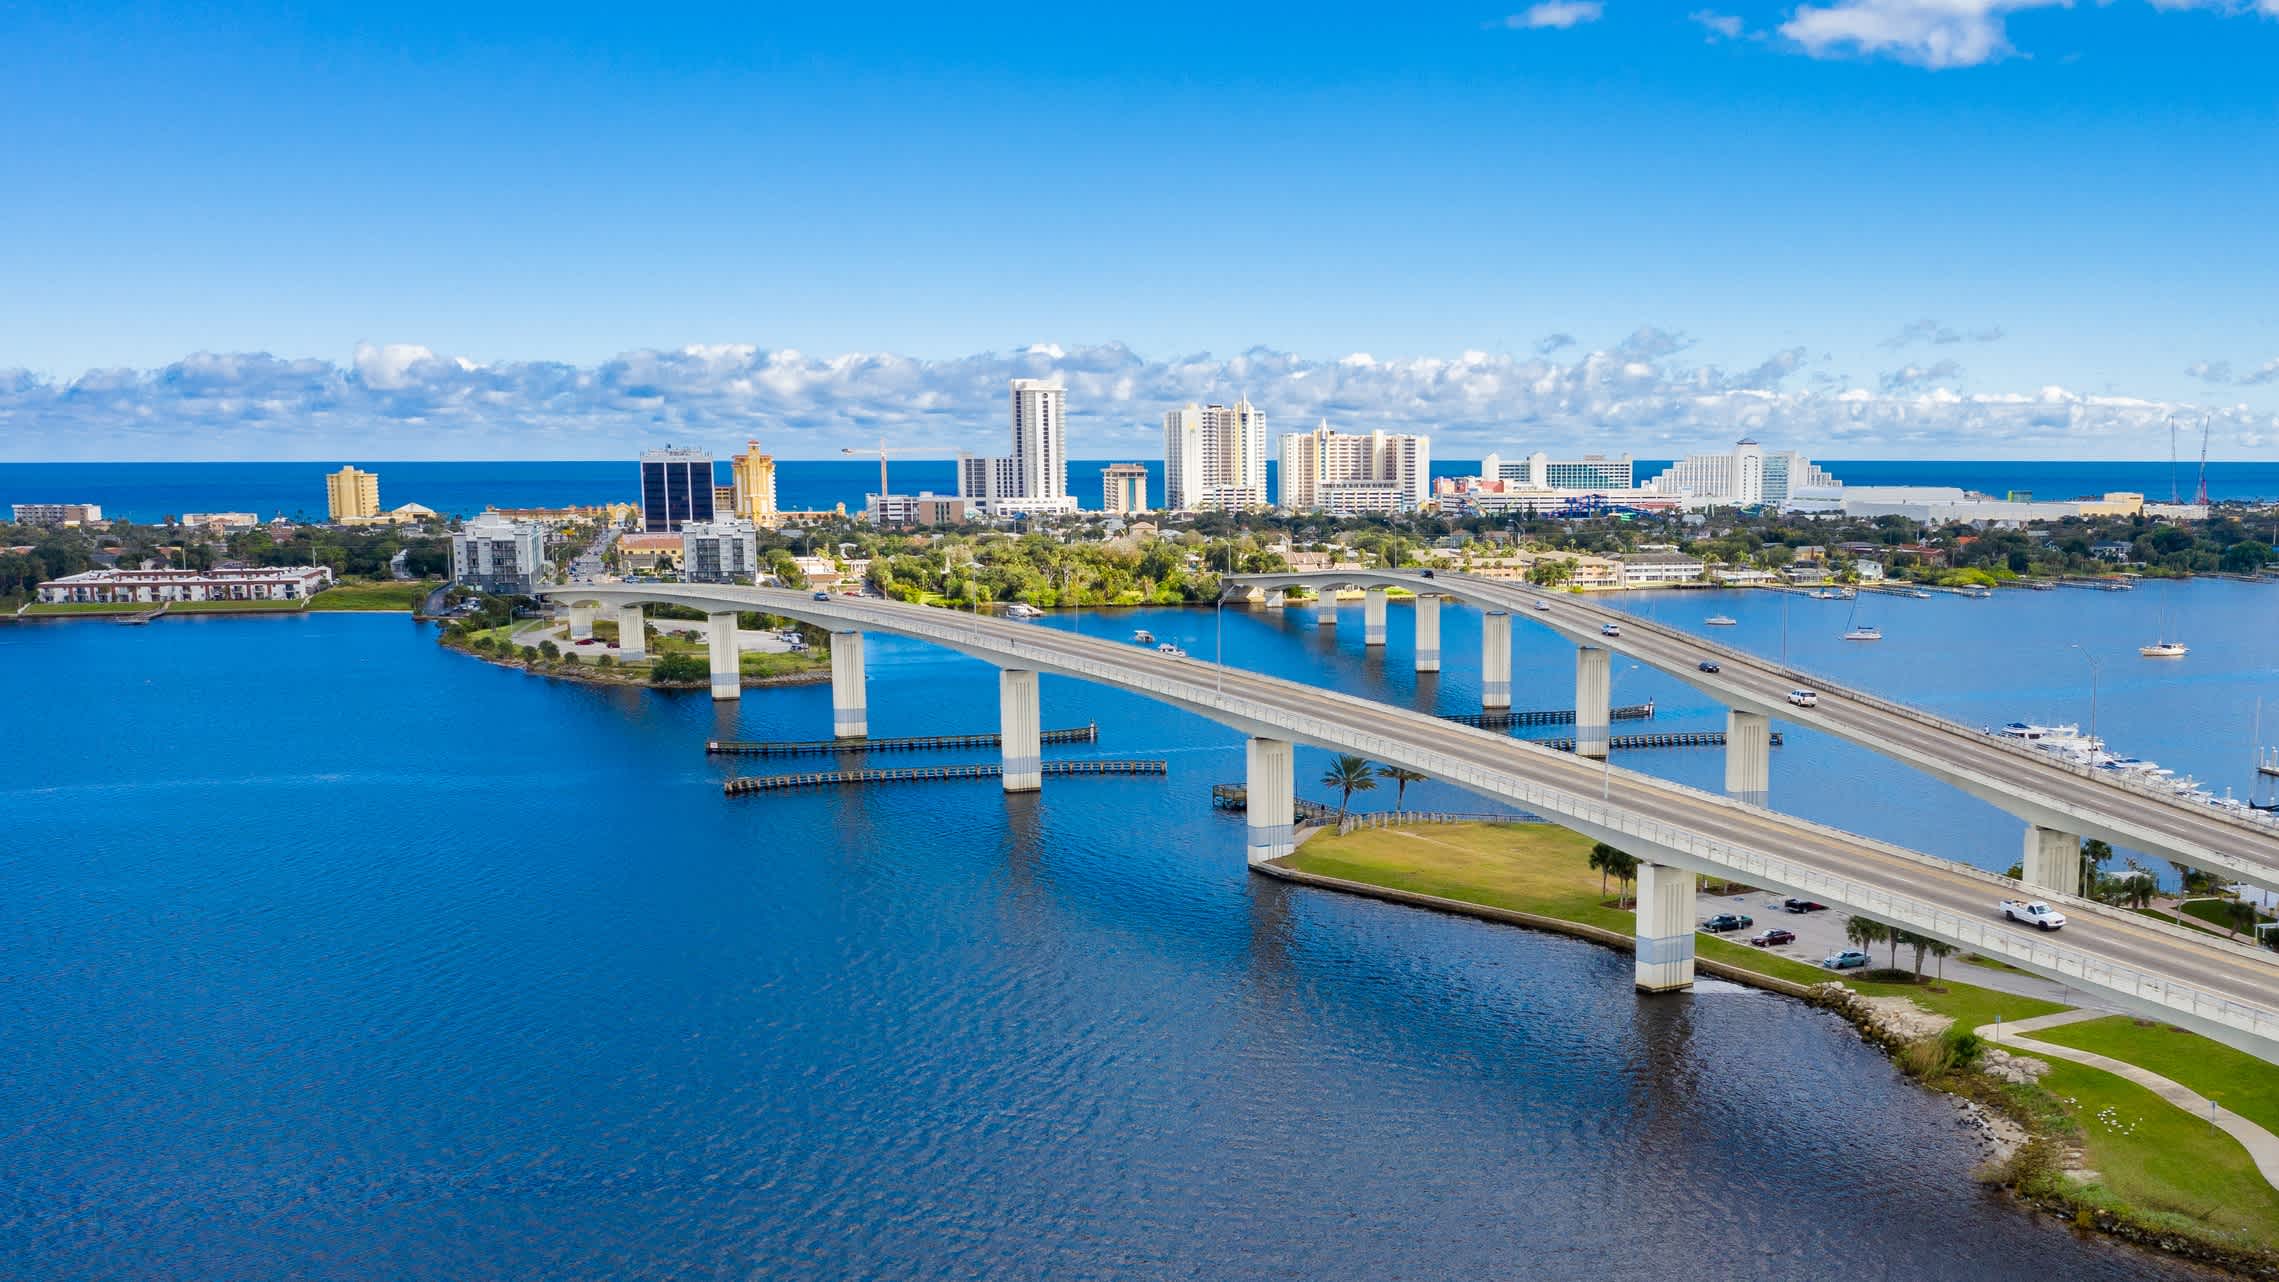  Luftbild von Daytona Beach Florida Skyline, USA.